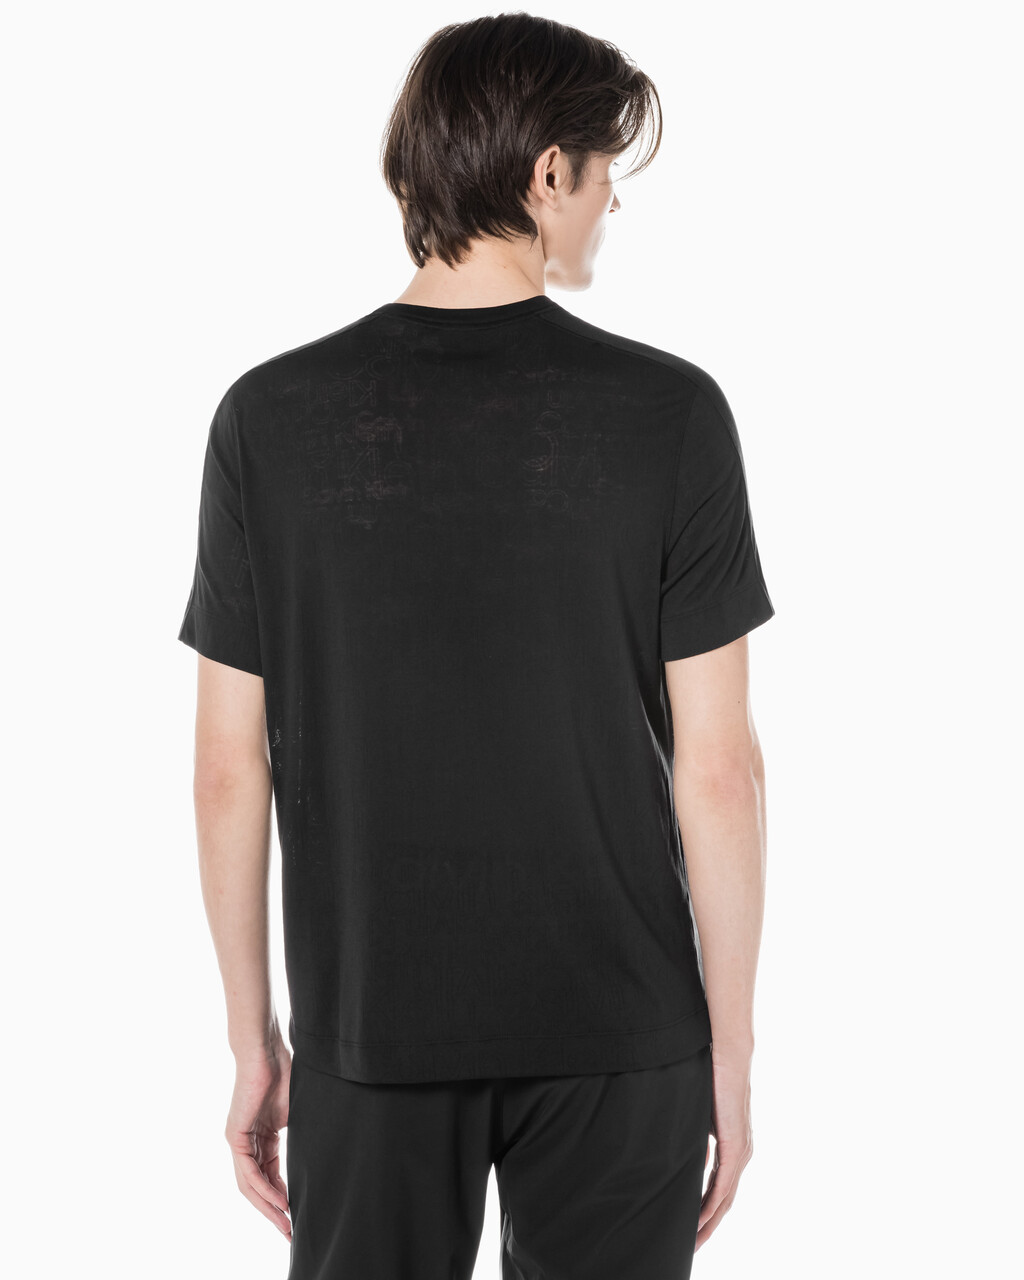 Buy 남성 레귤러핏 숄더 로고 숏슬리브 티셔츠 in color BLACK